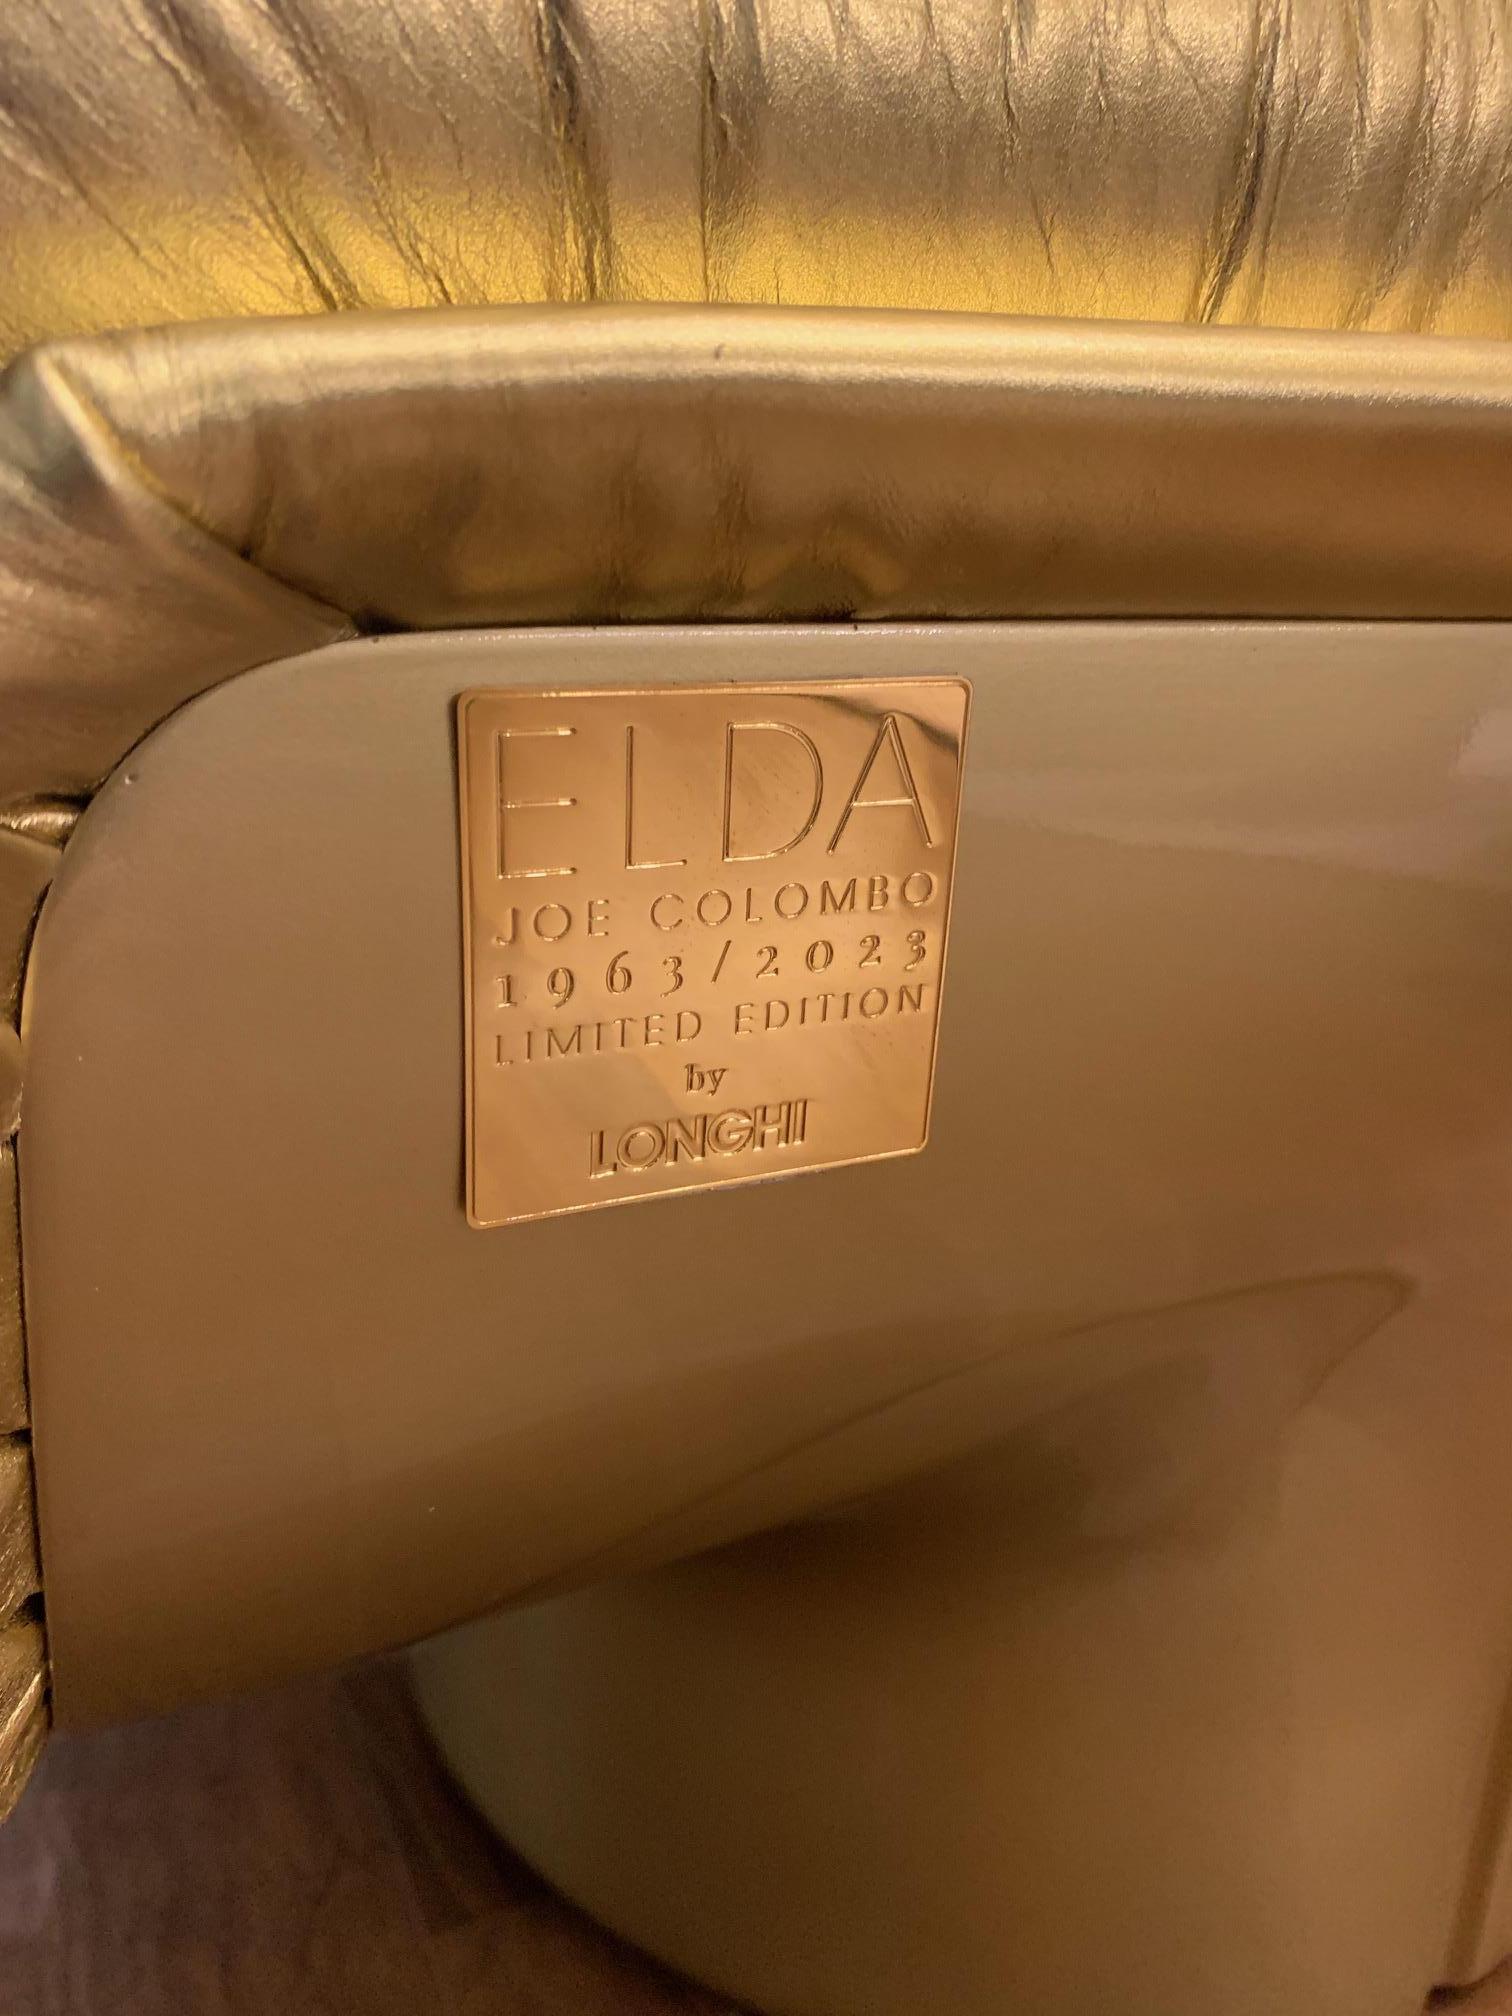 Joe Colombo Elda Chair, 60th Anniversary Limited Gold Edition  1